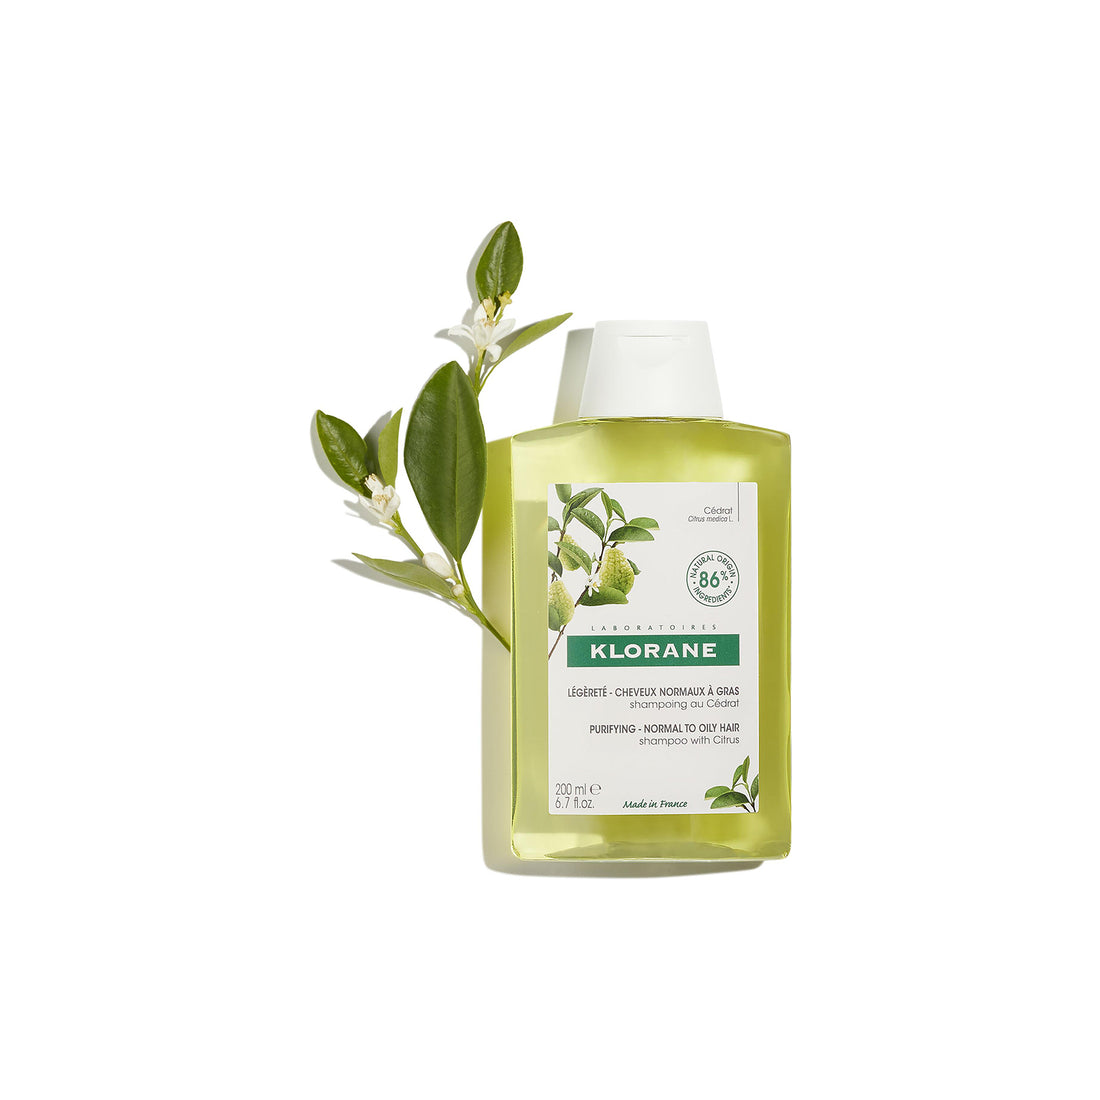 Klorane Purifying Shampoo with Citrus Pulp 400ml (13.53fl oz)